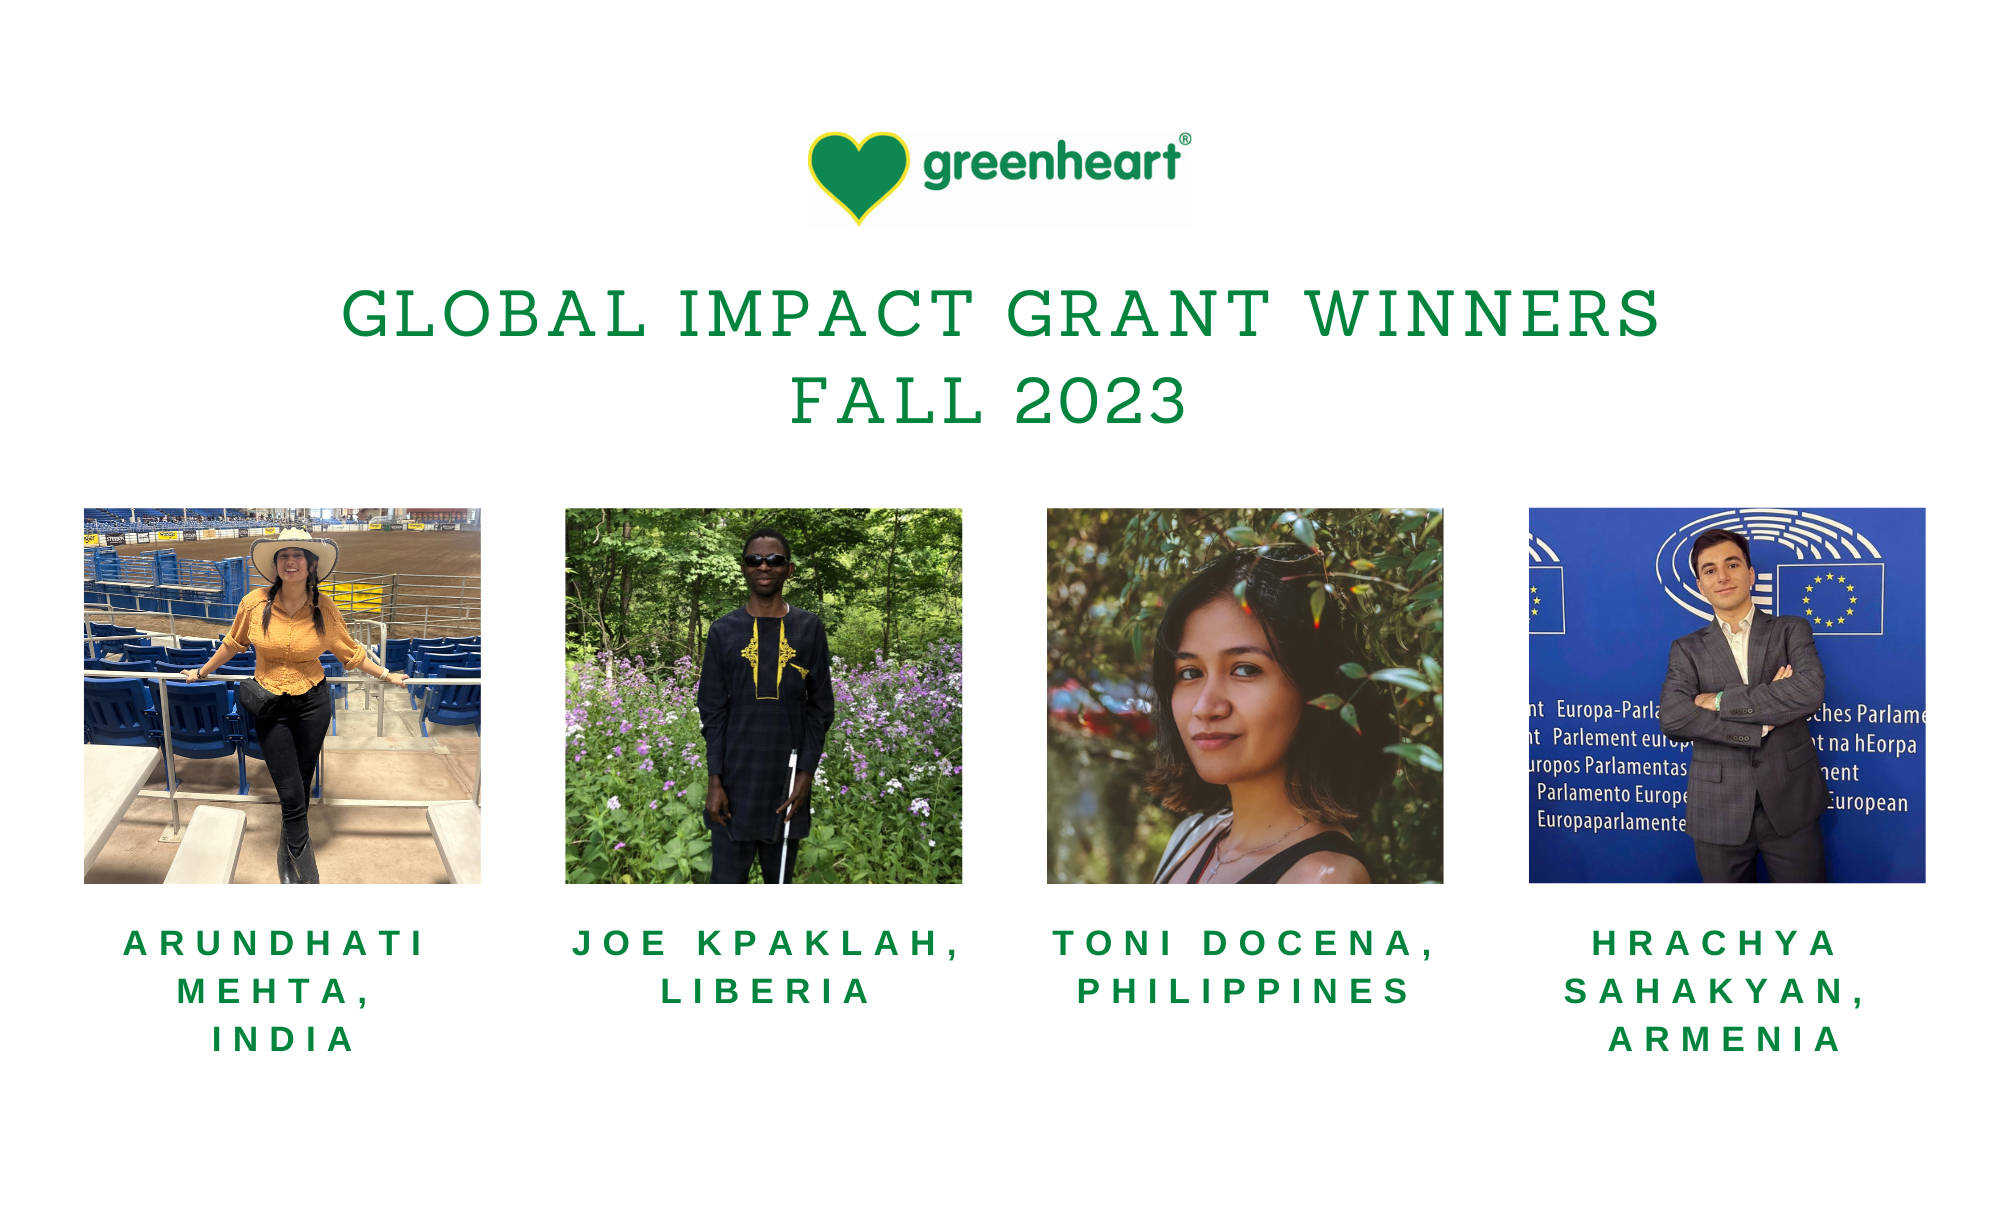 Announcing Greenheart’s Fall 2023 Global Impact Grant Winners